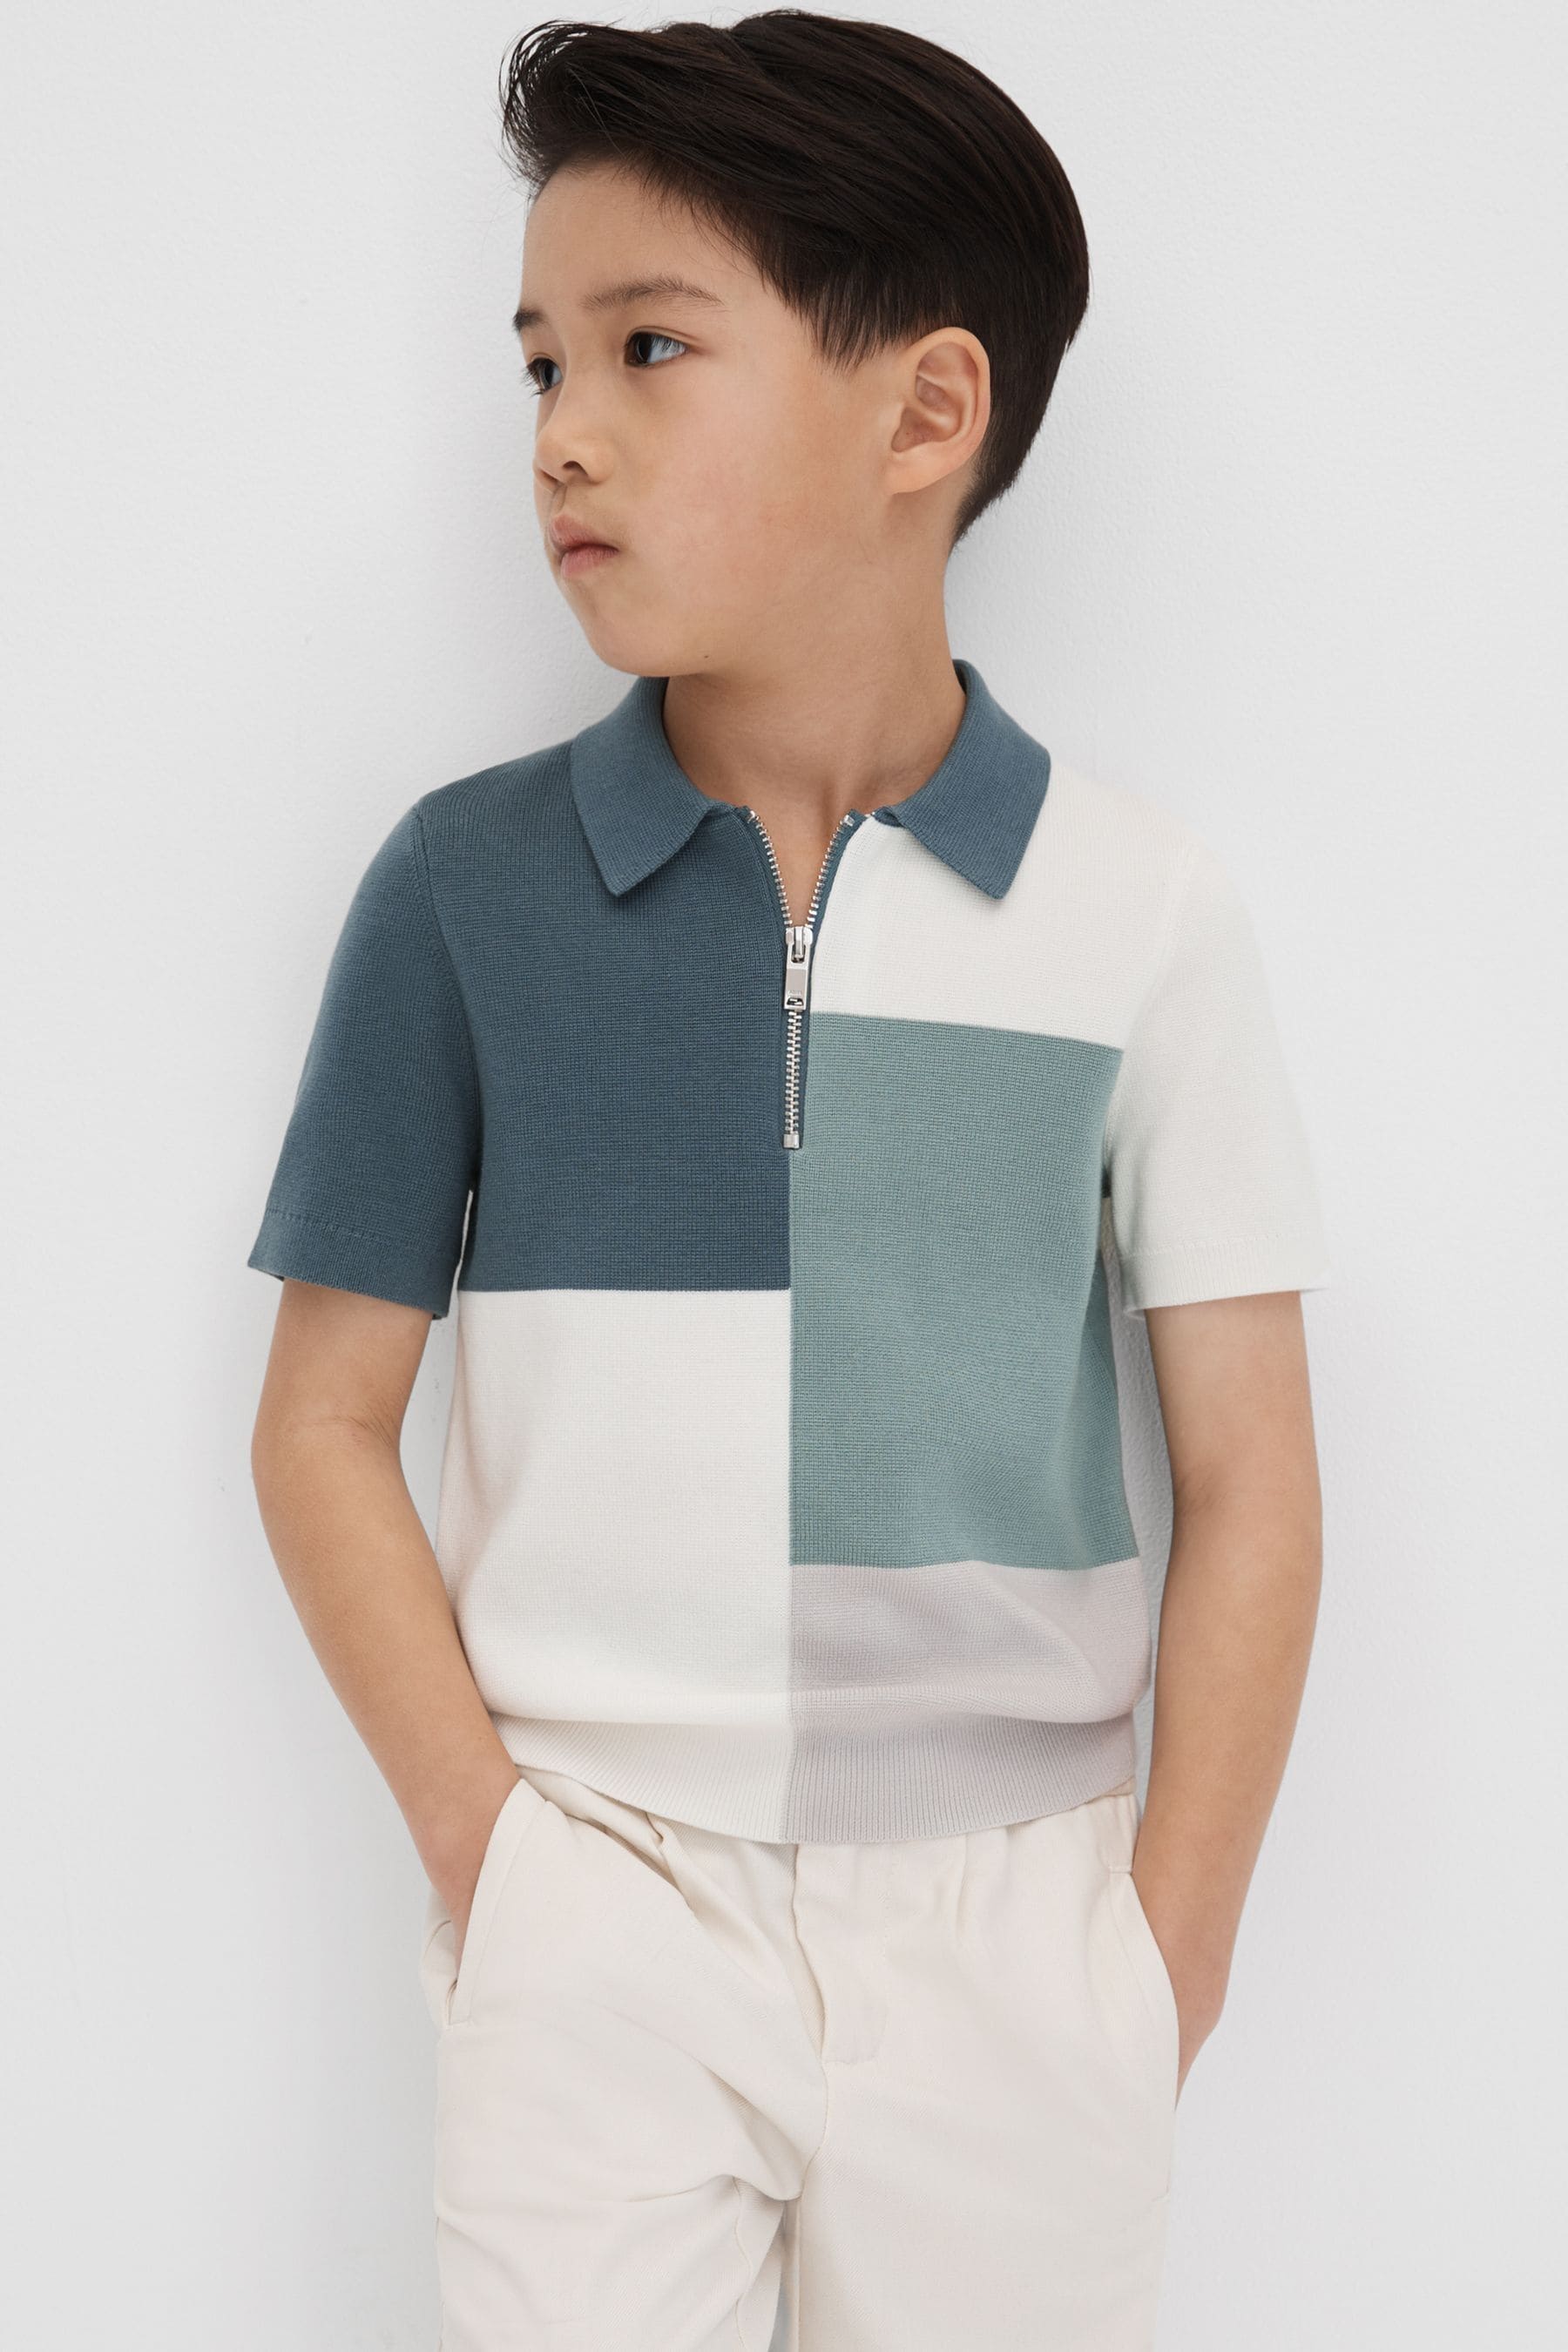 Reiss Kids' Delta - Sage Junior Colourblock Half-zip Polo Shirt, Age 5-6 Years